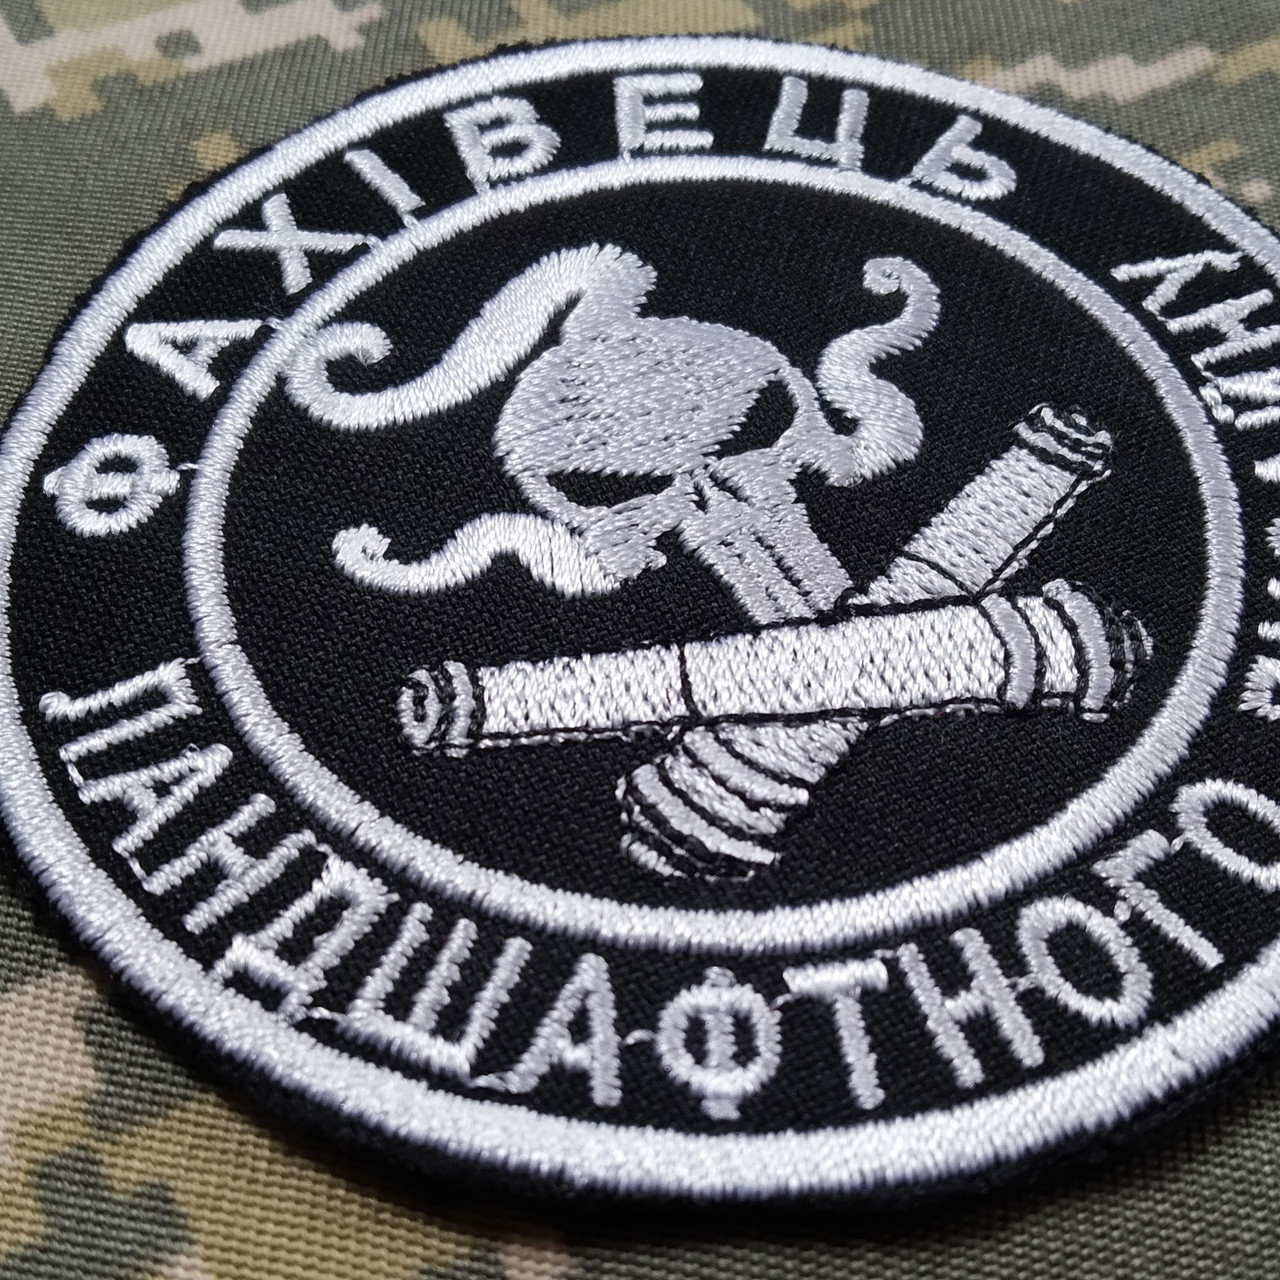 нашивки для збройних сил україни